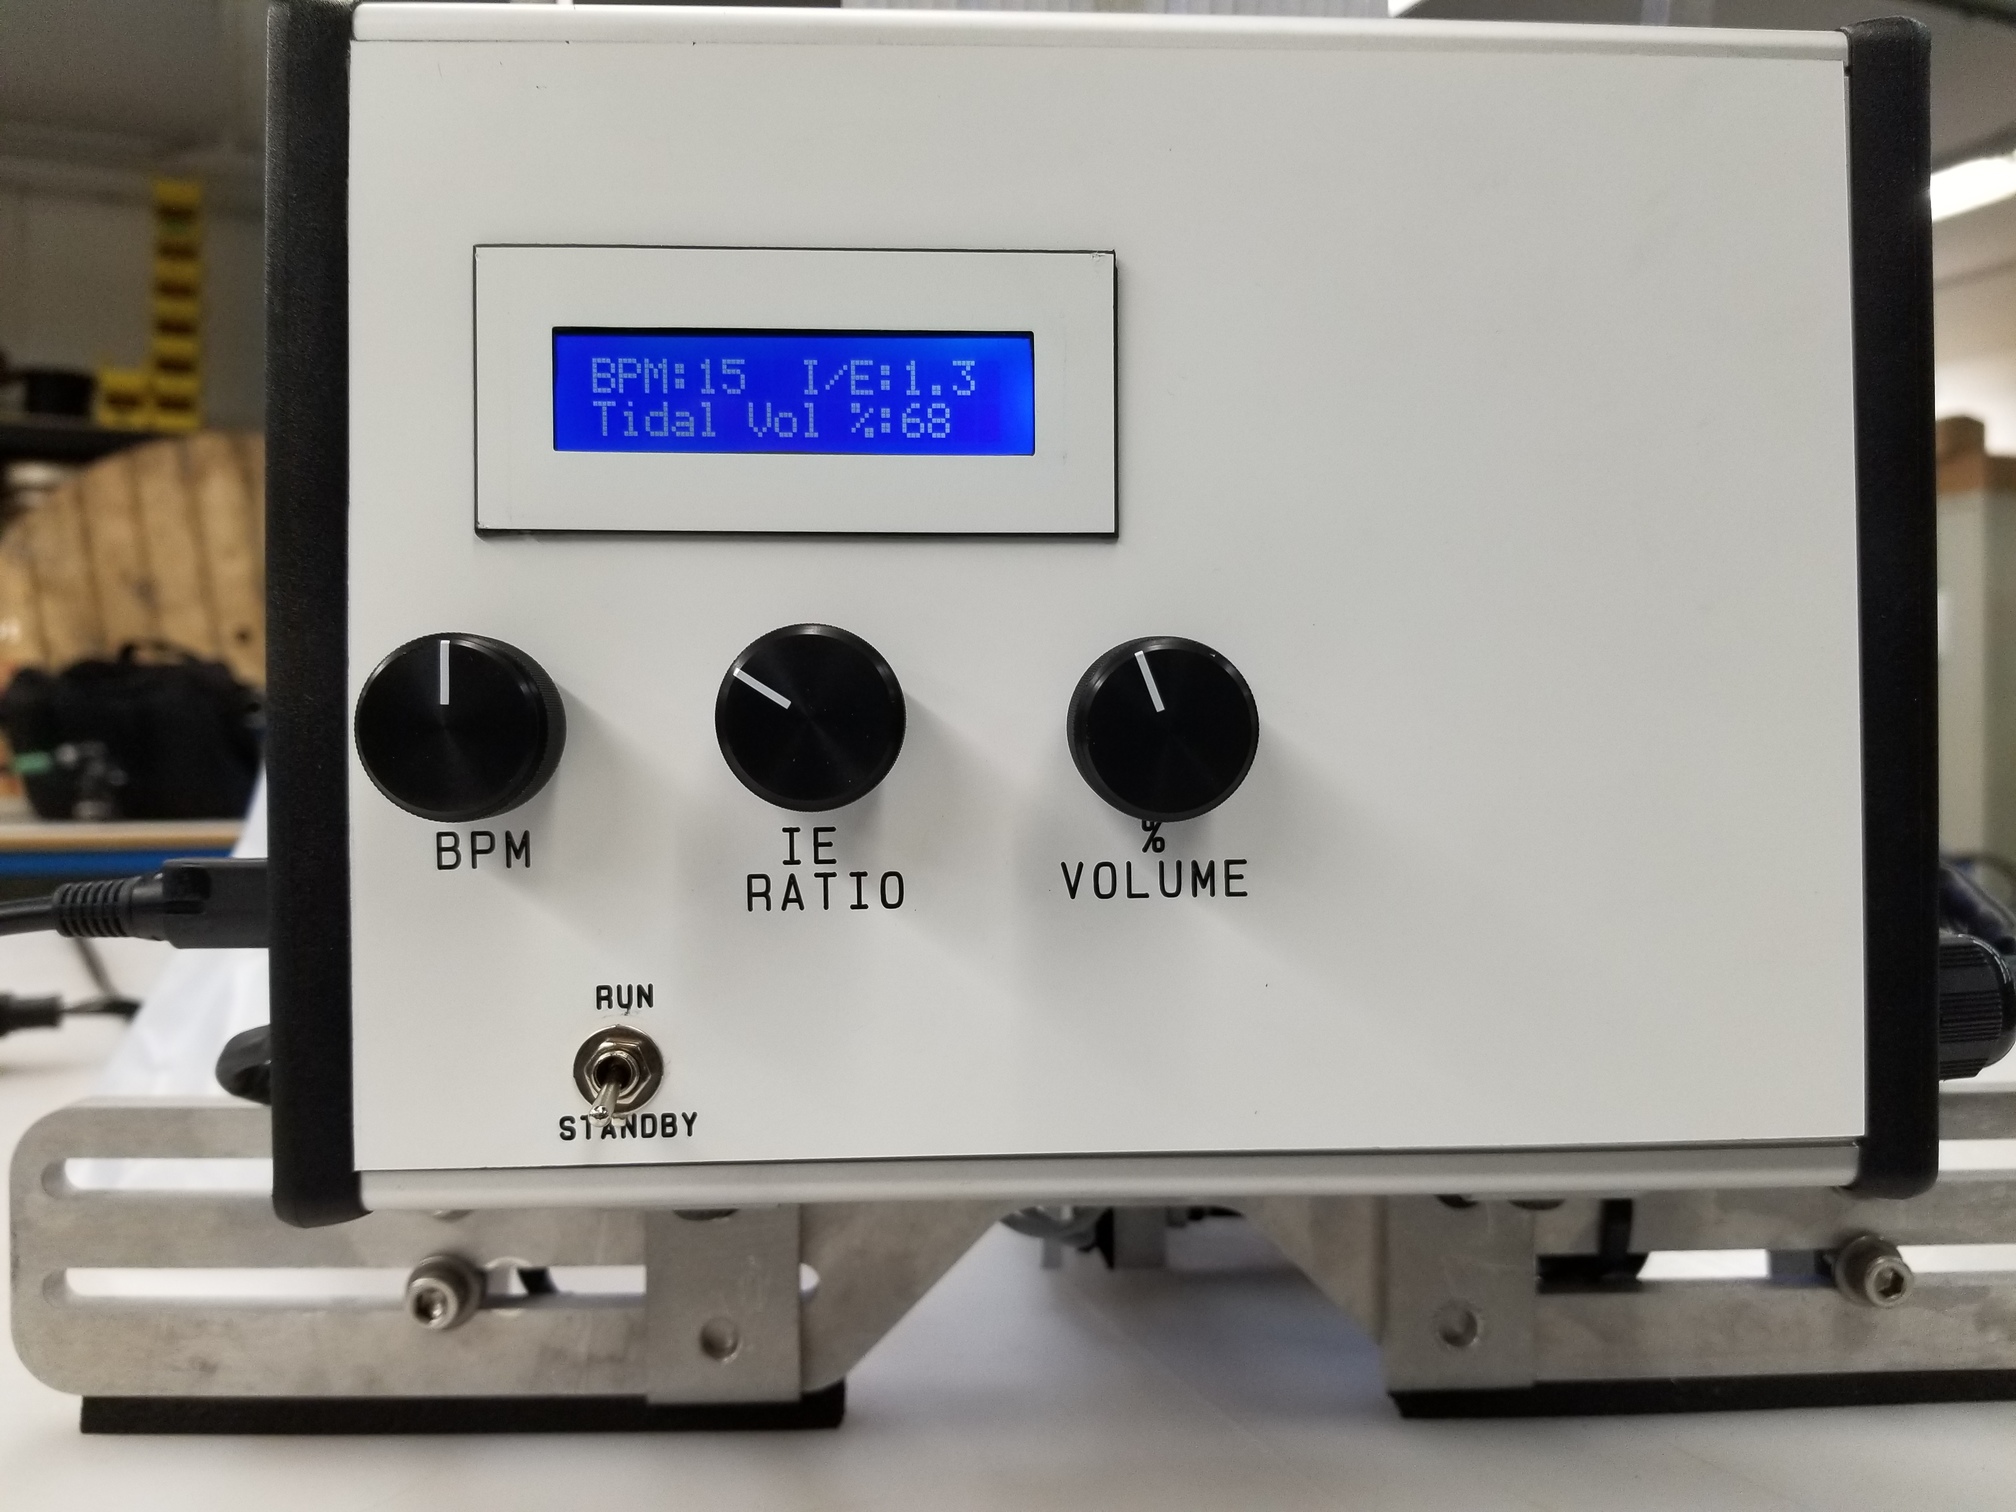 BVM-HALO-VENT-2.1 controls